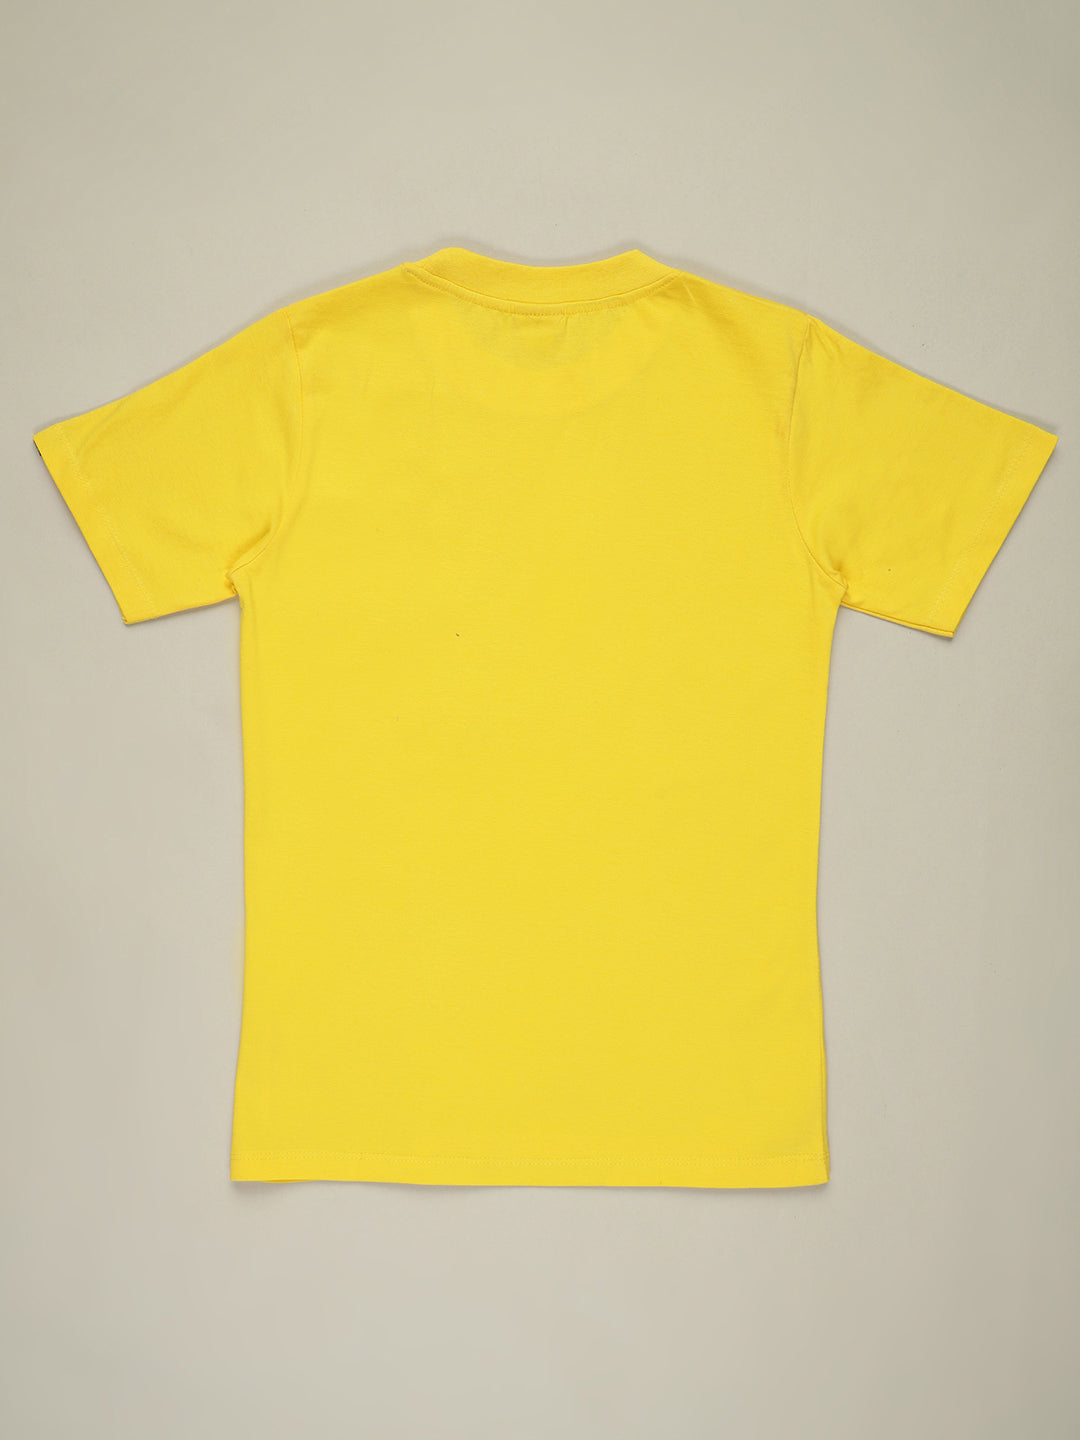 Doo T-shirts for Boys & Girls